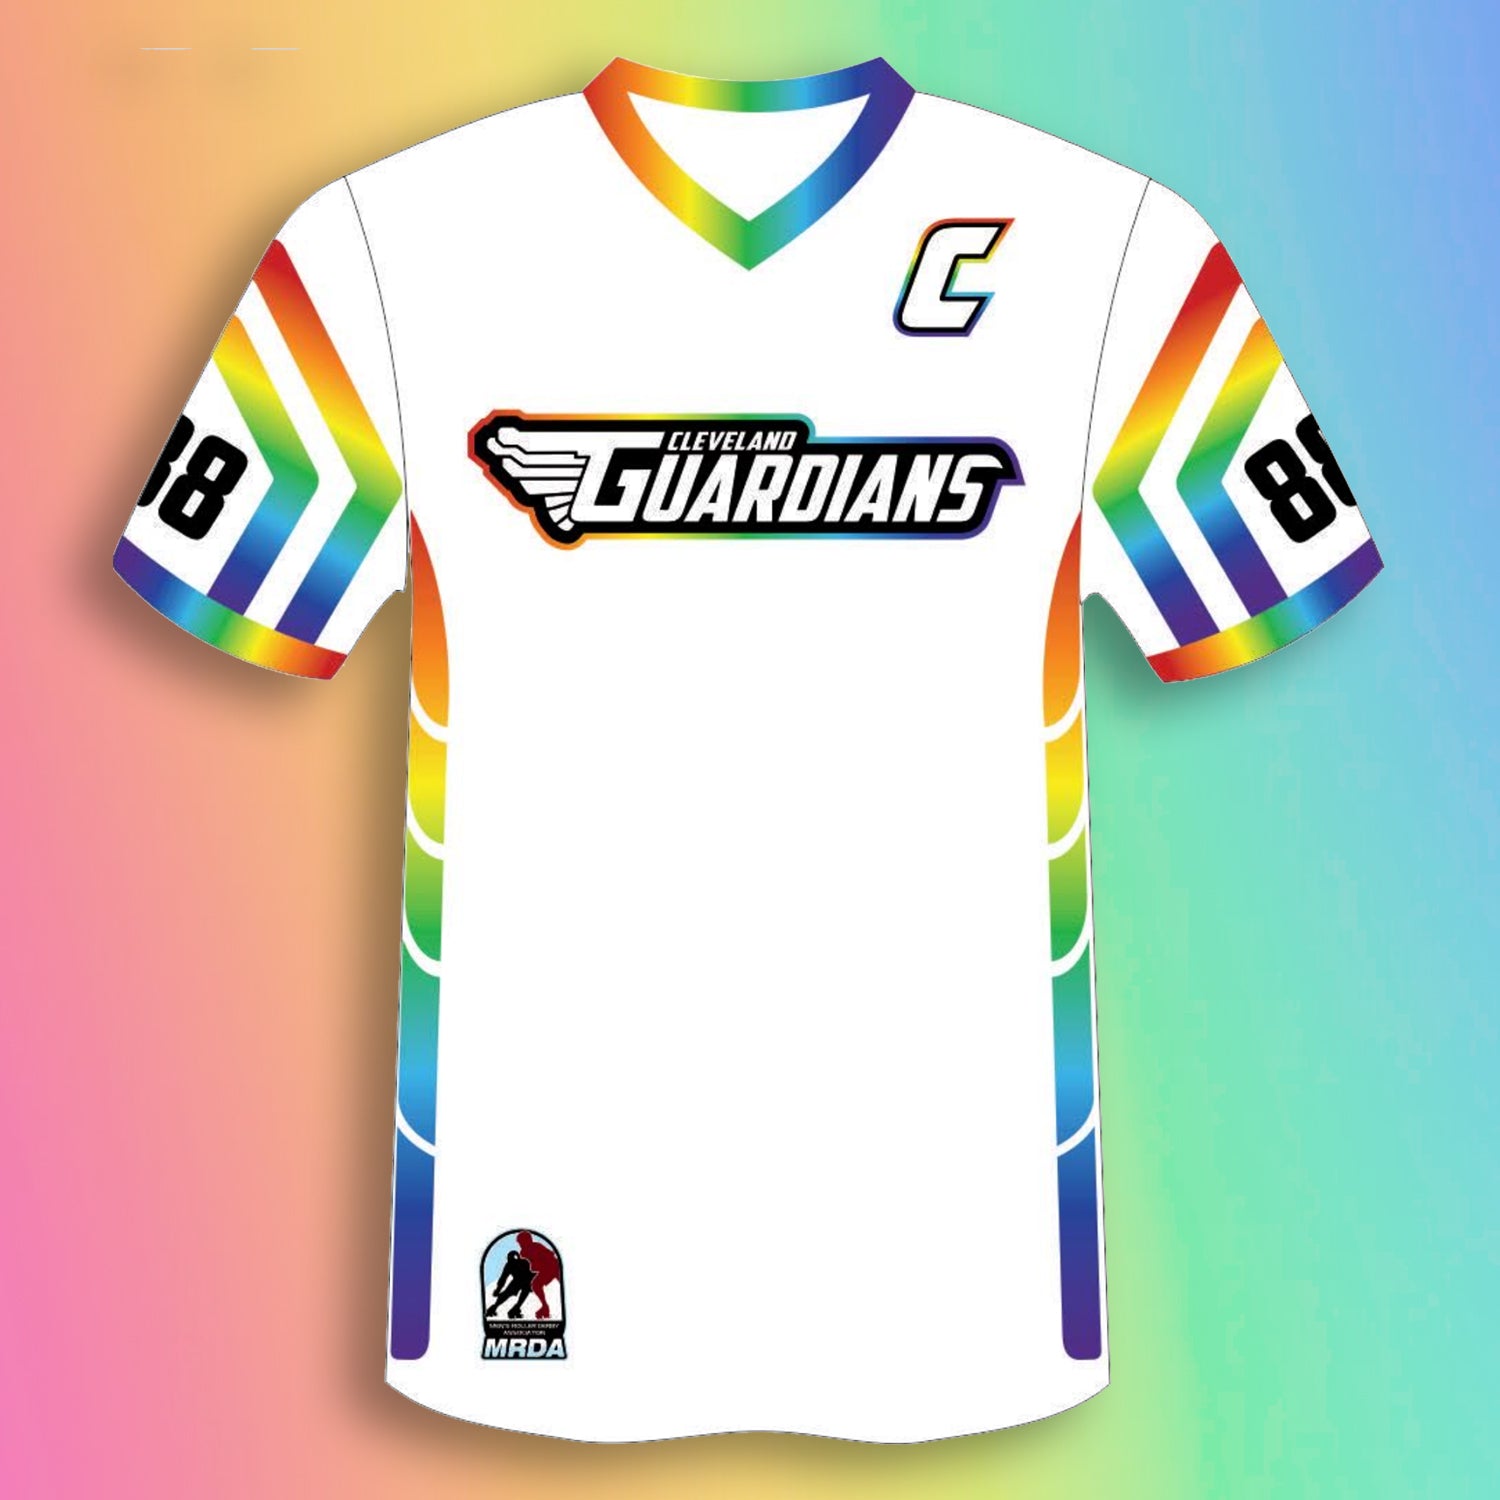 Guardians Pride - Authentic Jerseys – The Cleveland Guardians Store